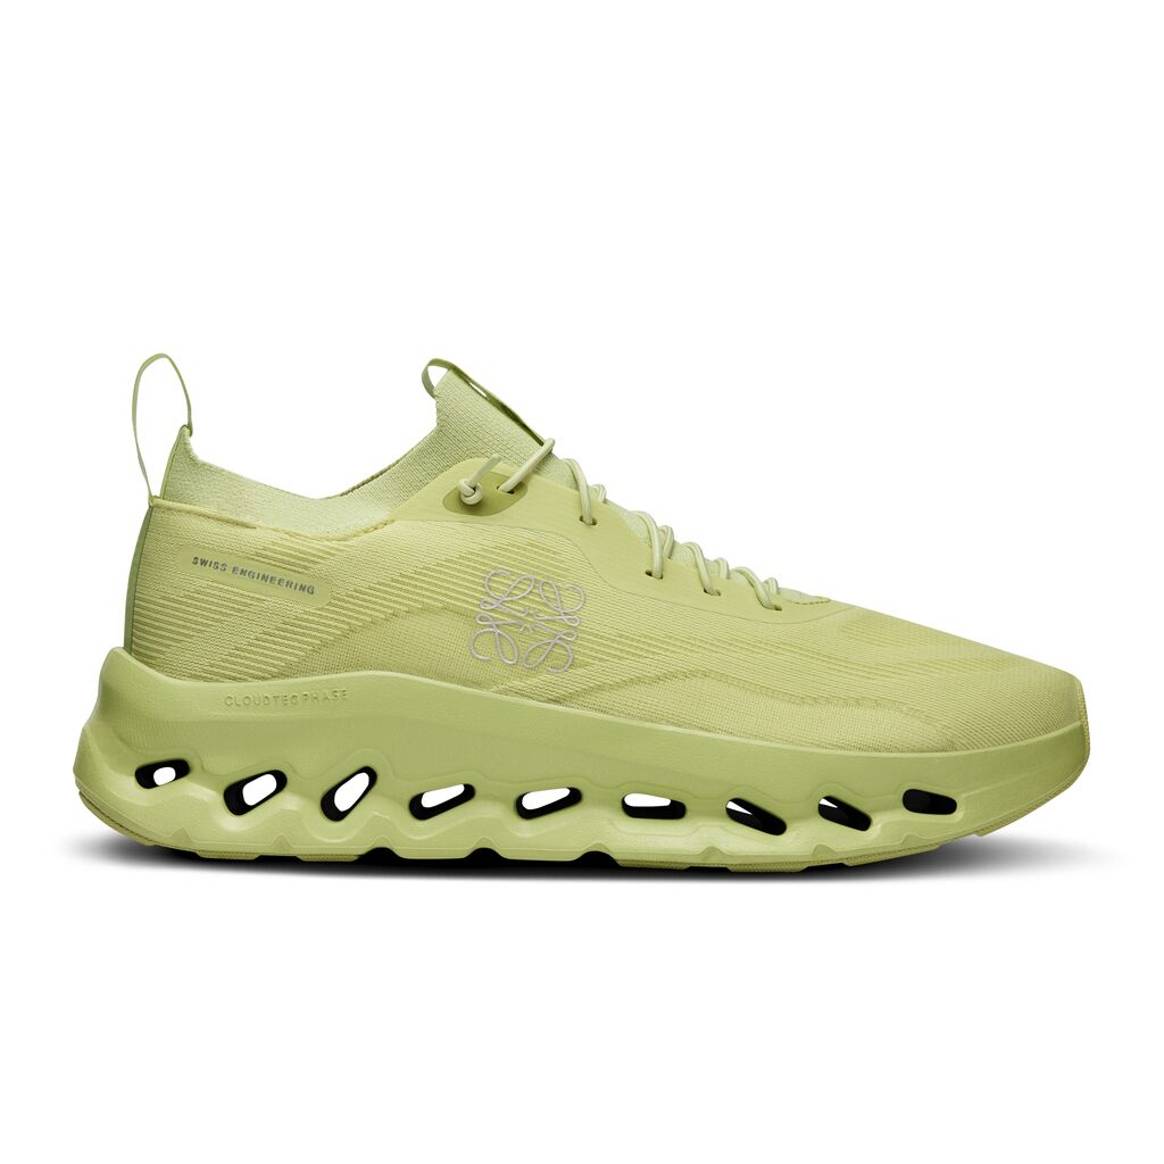 Cloudtilt sneaker in polyester Khaki Green - LOEWE